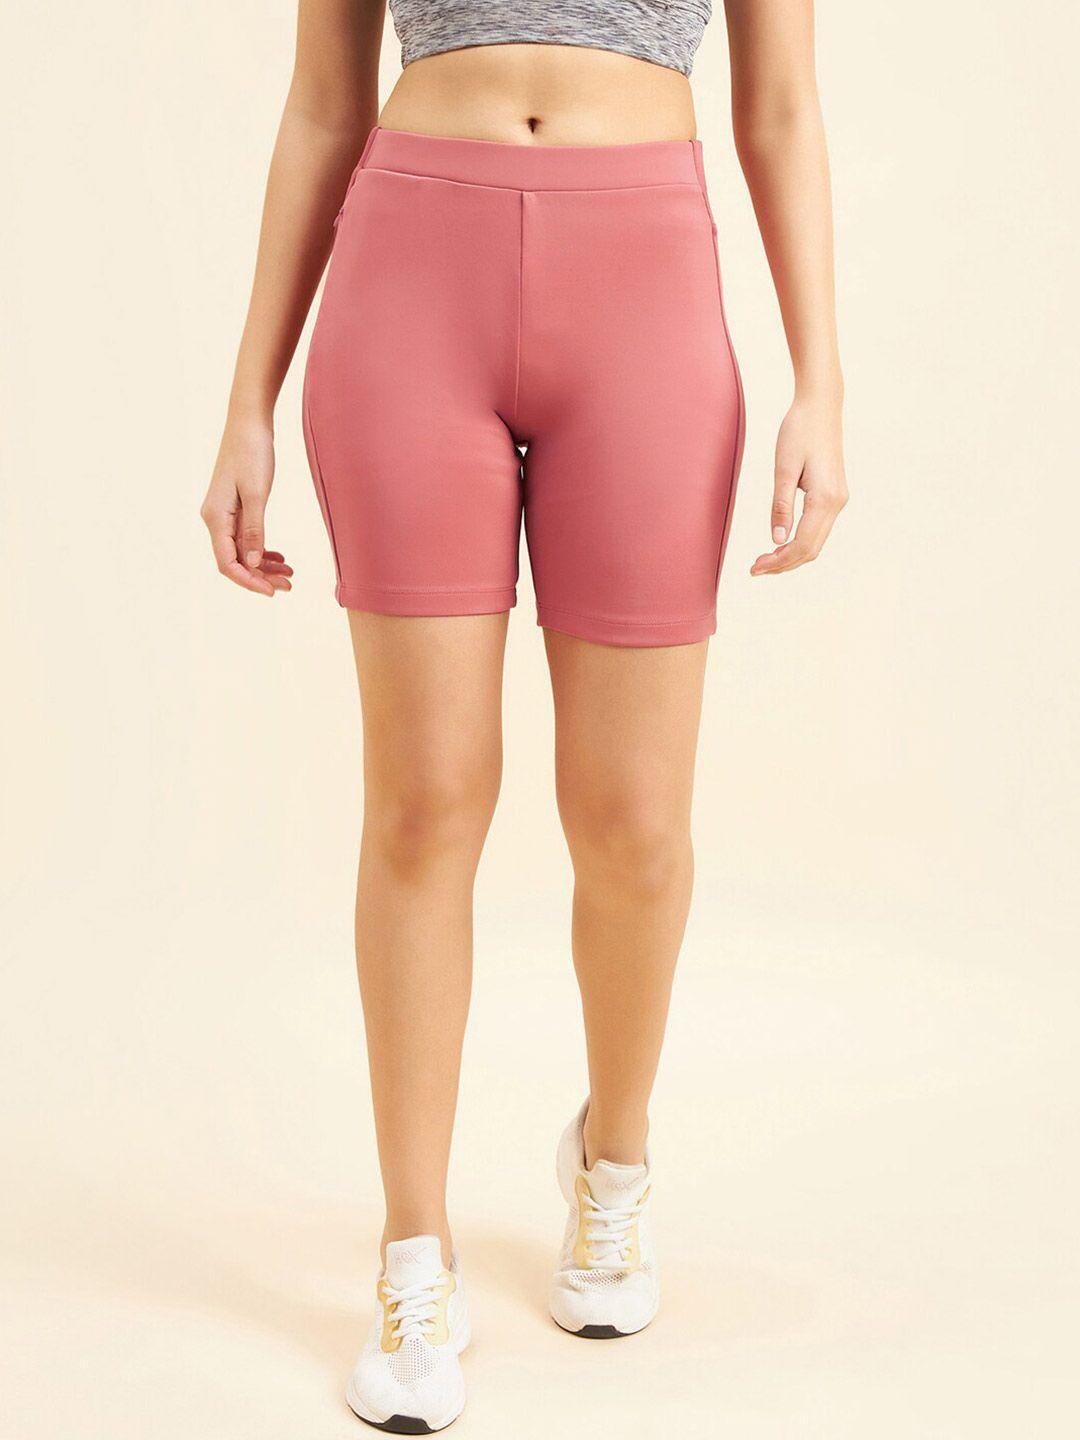 sweet-dreams-women-peach-coloured-mid-rise-sports-shorts